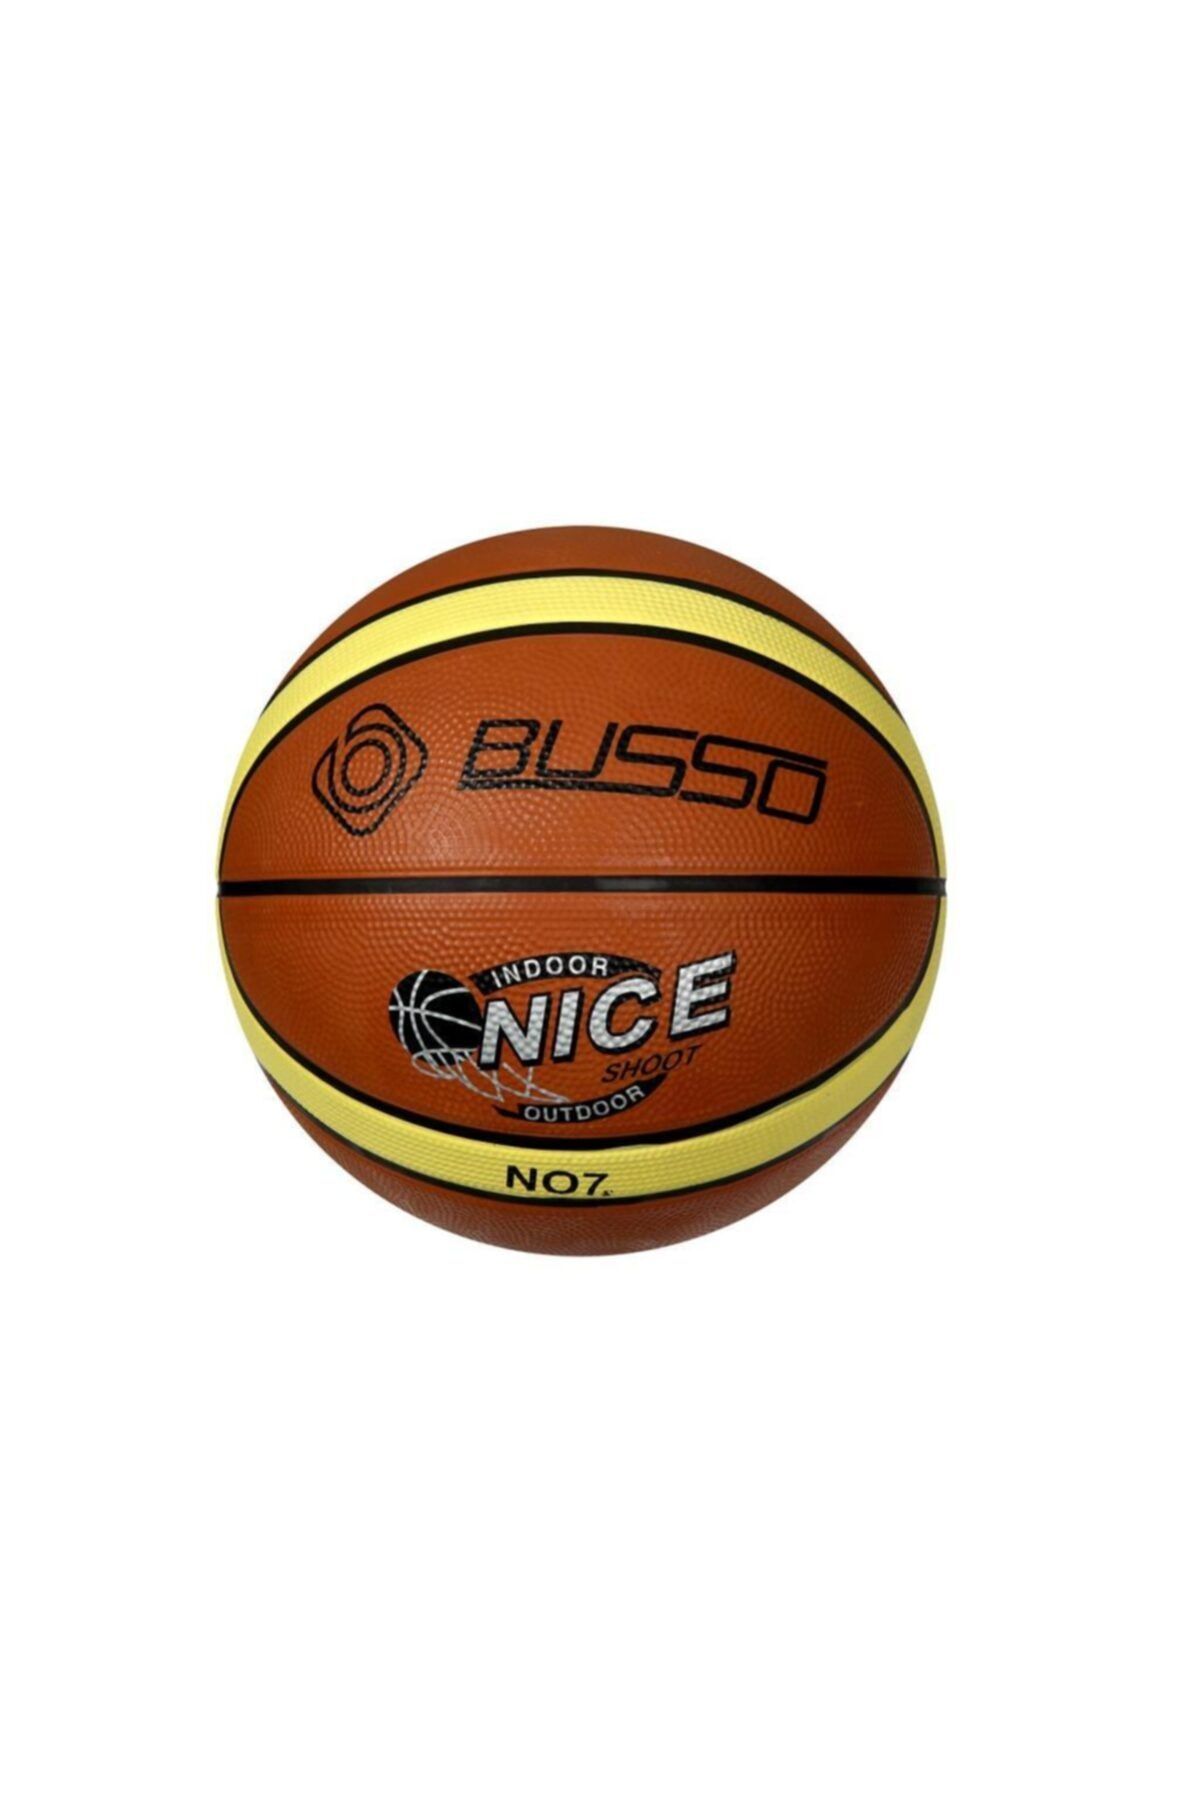 Busso Nice Basketbol Topu Numara 7